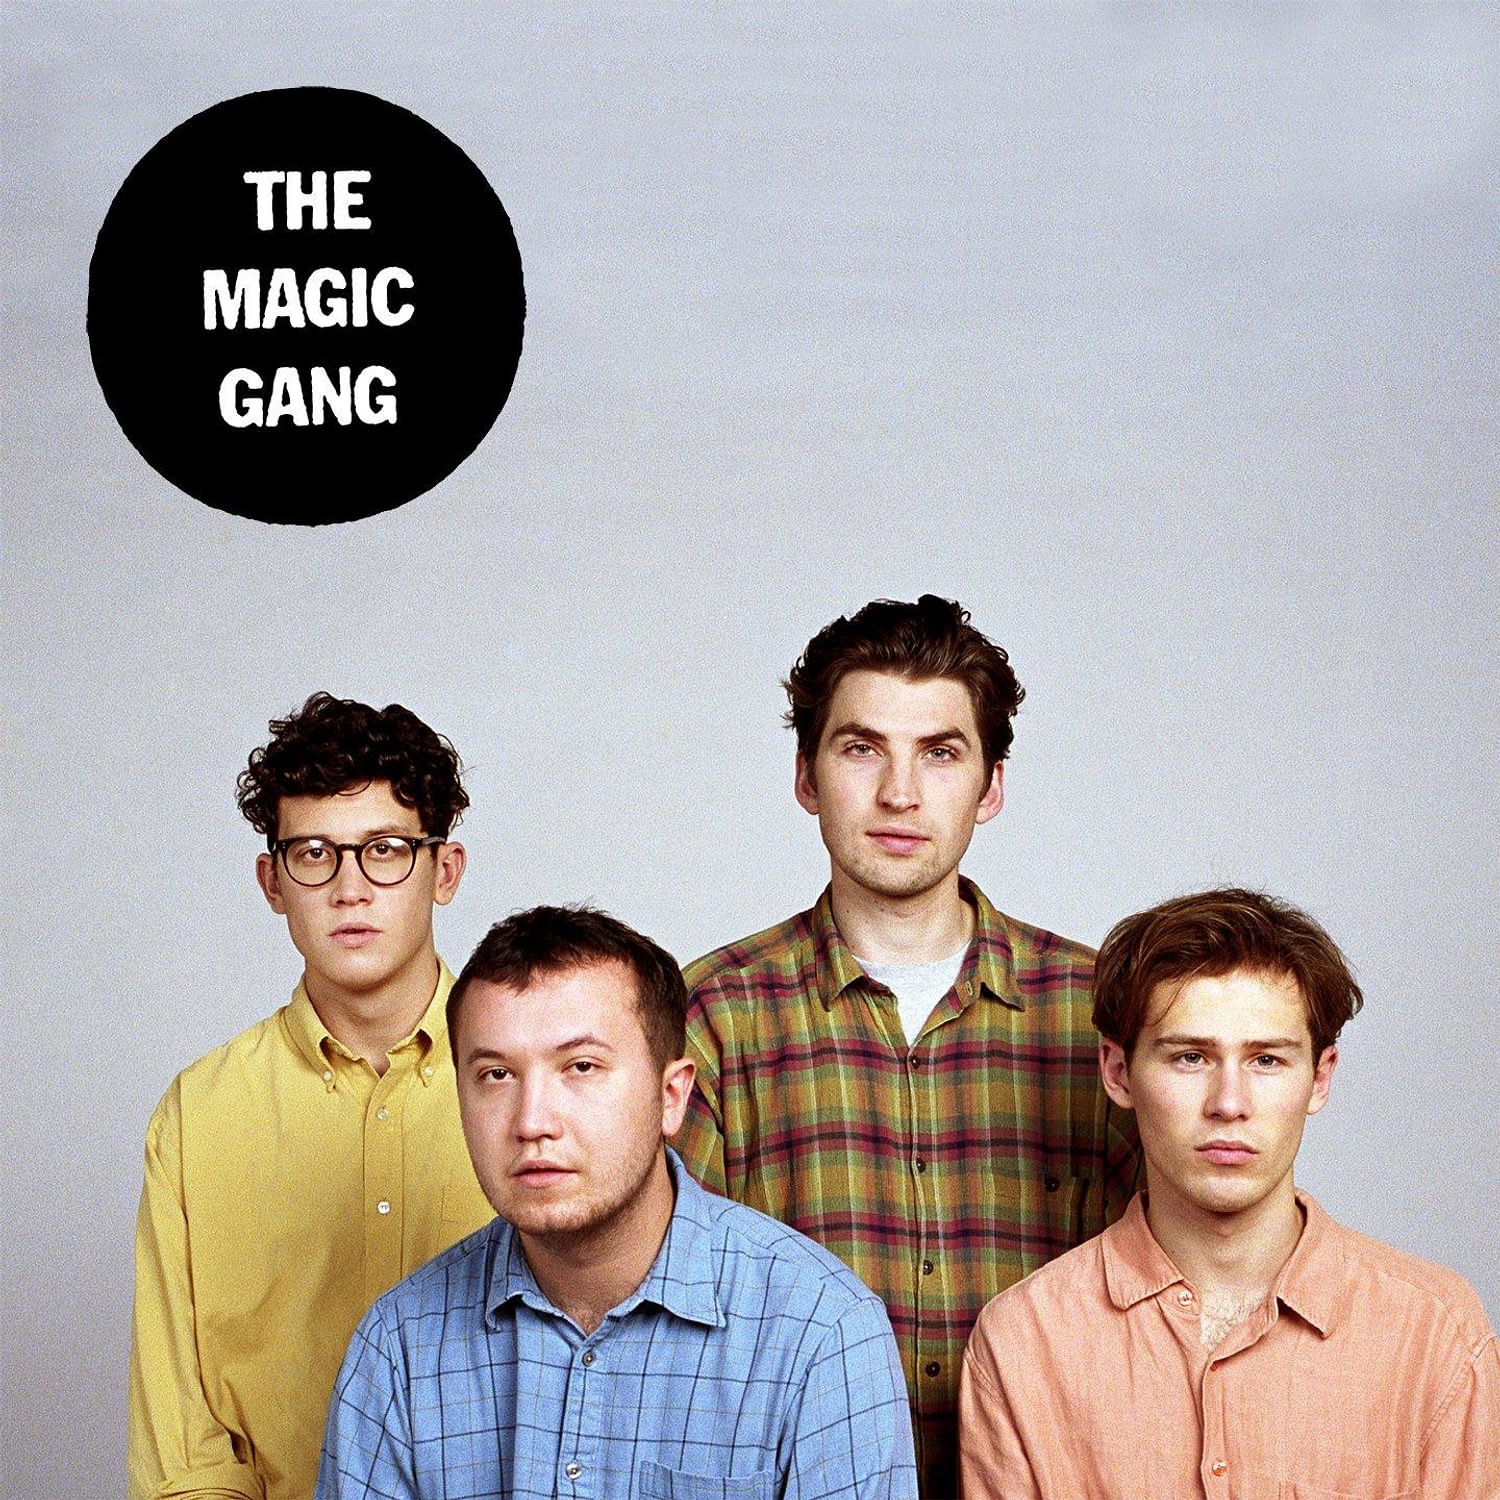 The Magic Gang - The Magic Gang